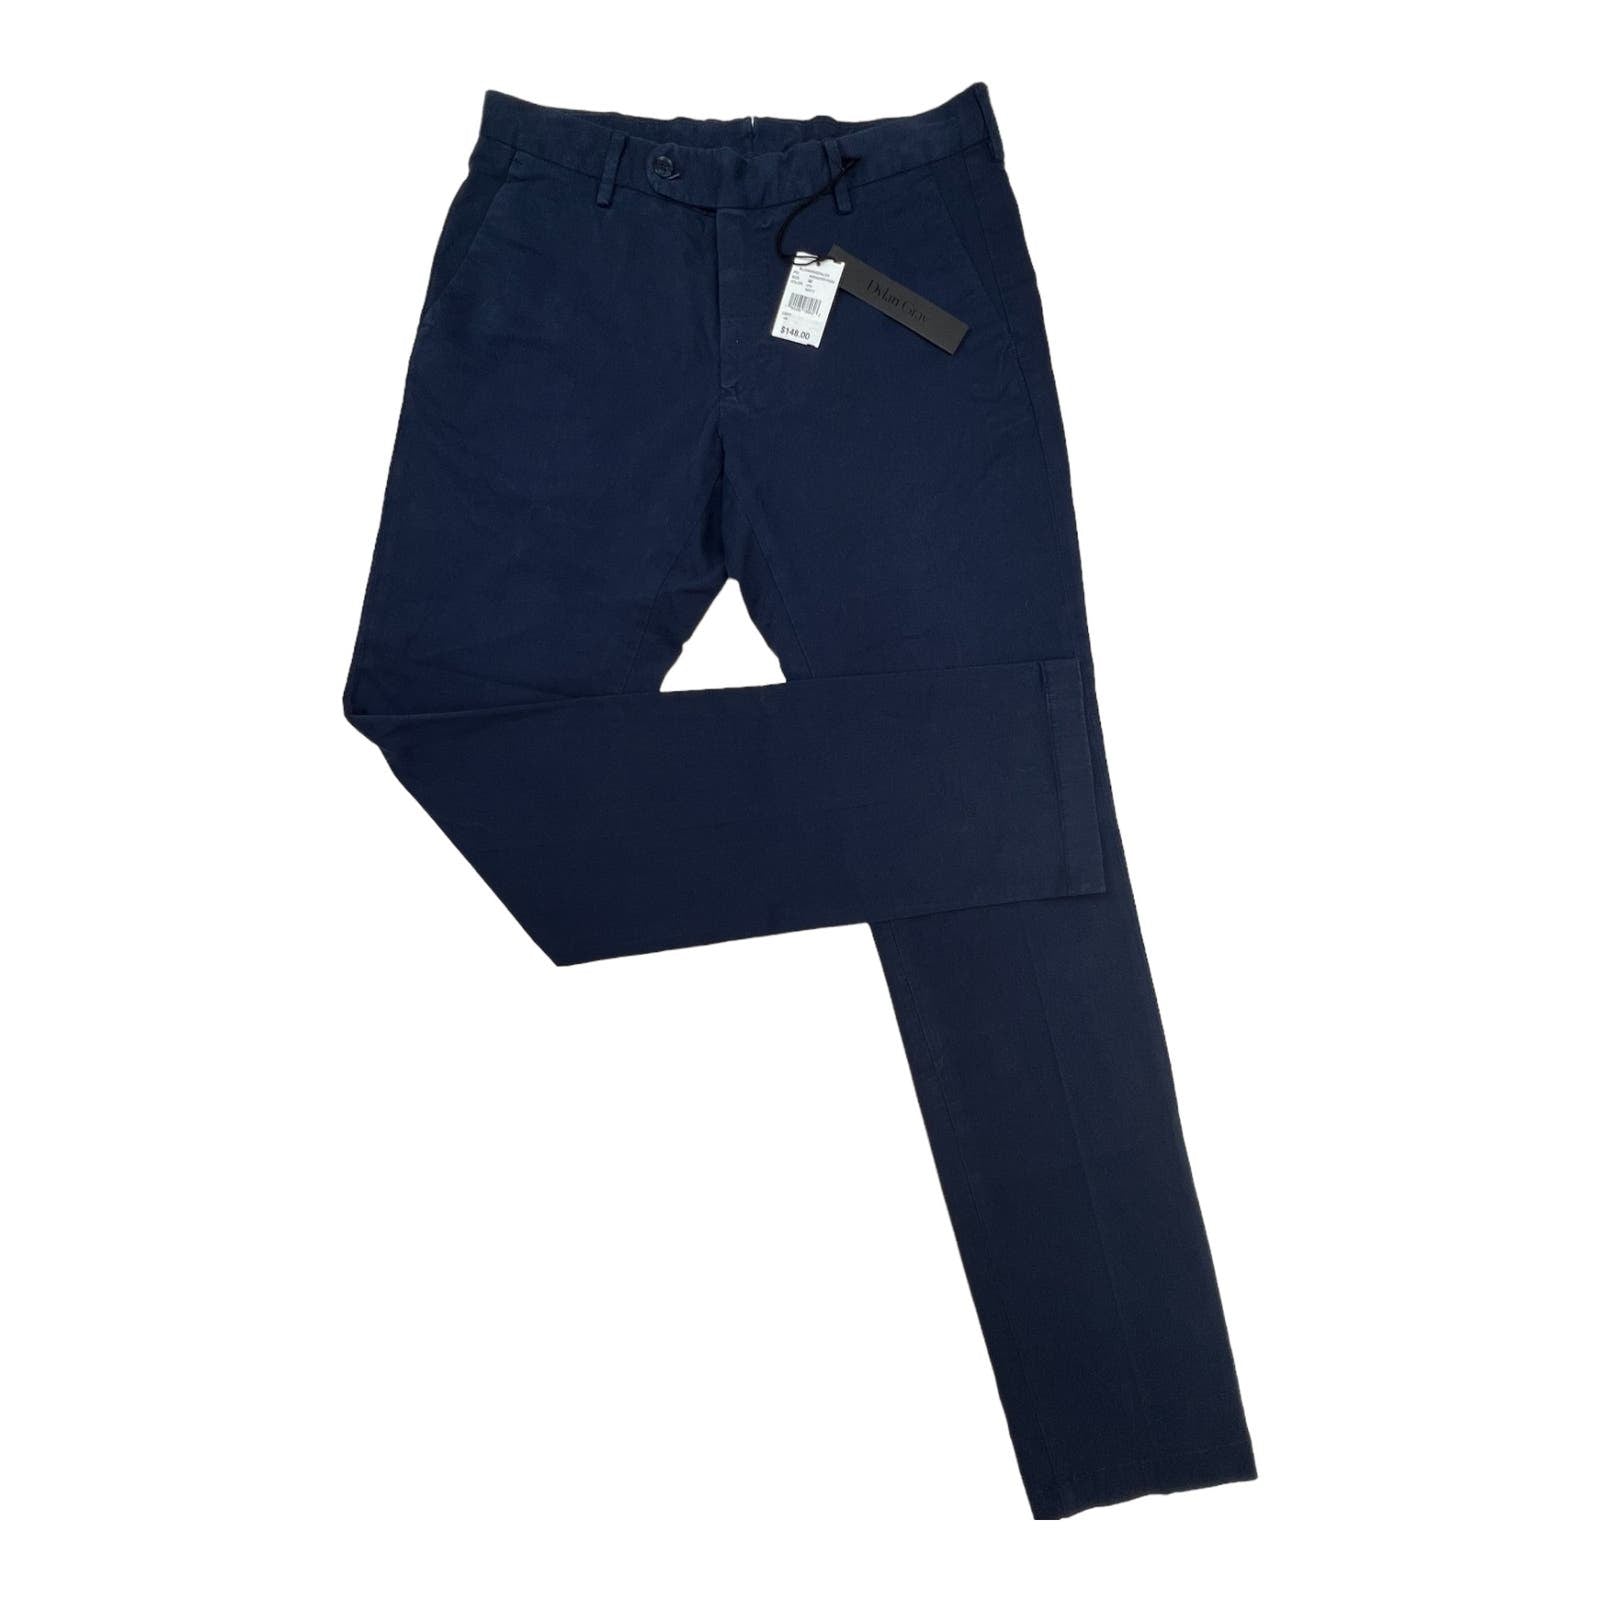 Dylan Gray Men Navy Blue Pants US 30 Casual Slim Fit